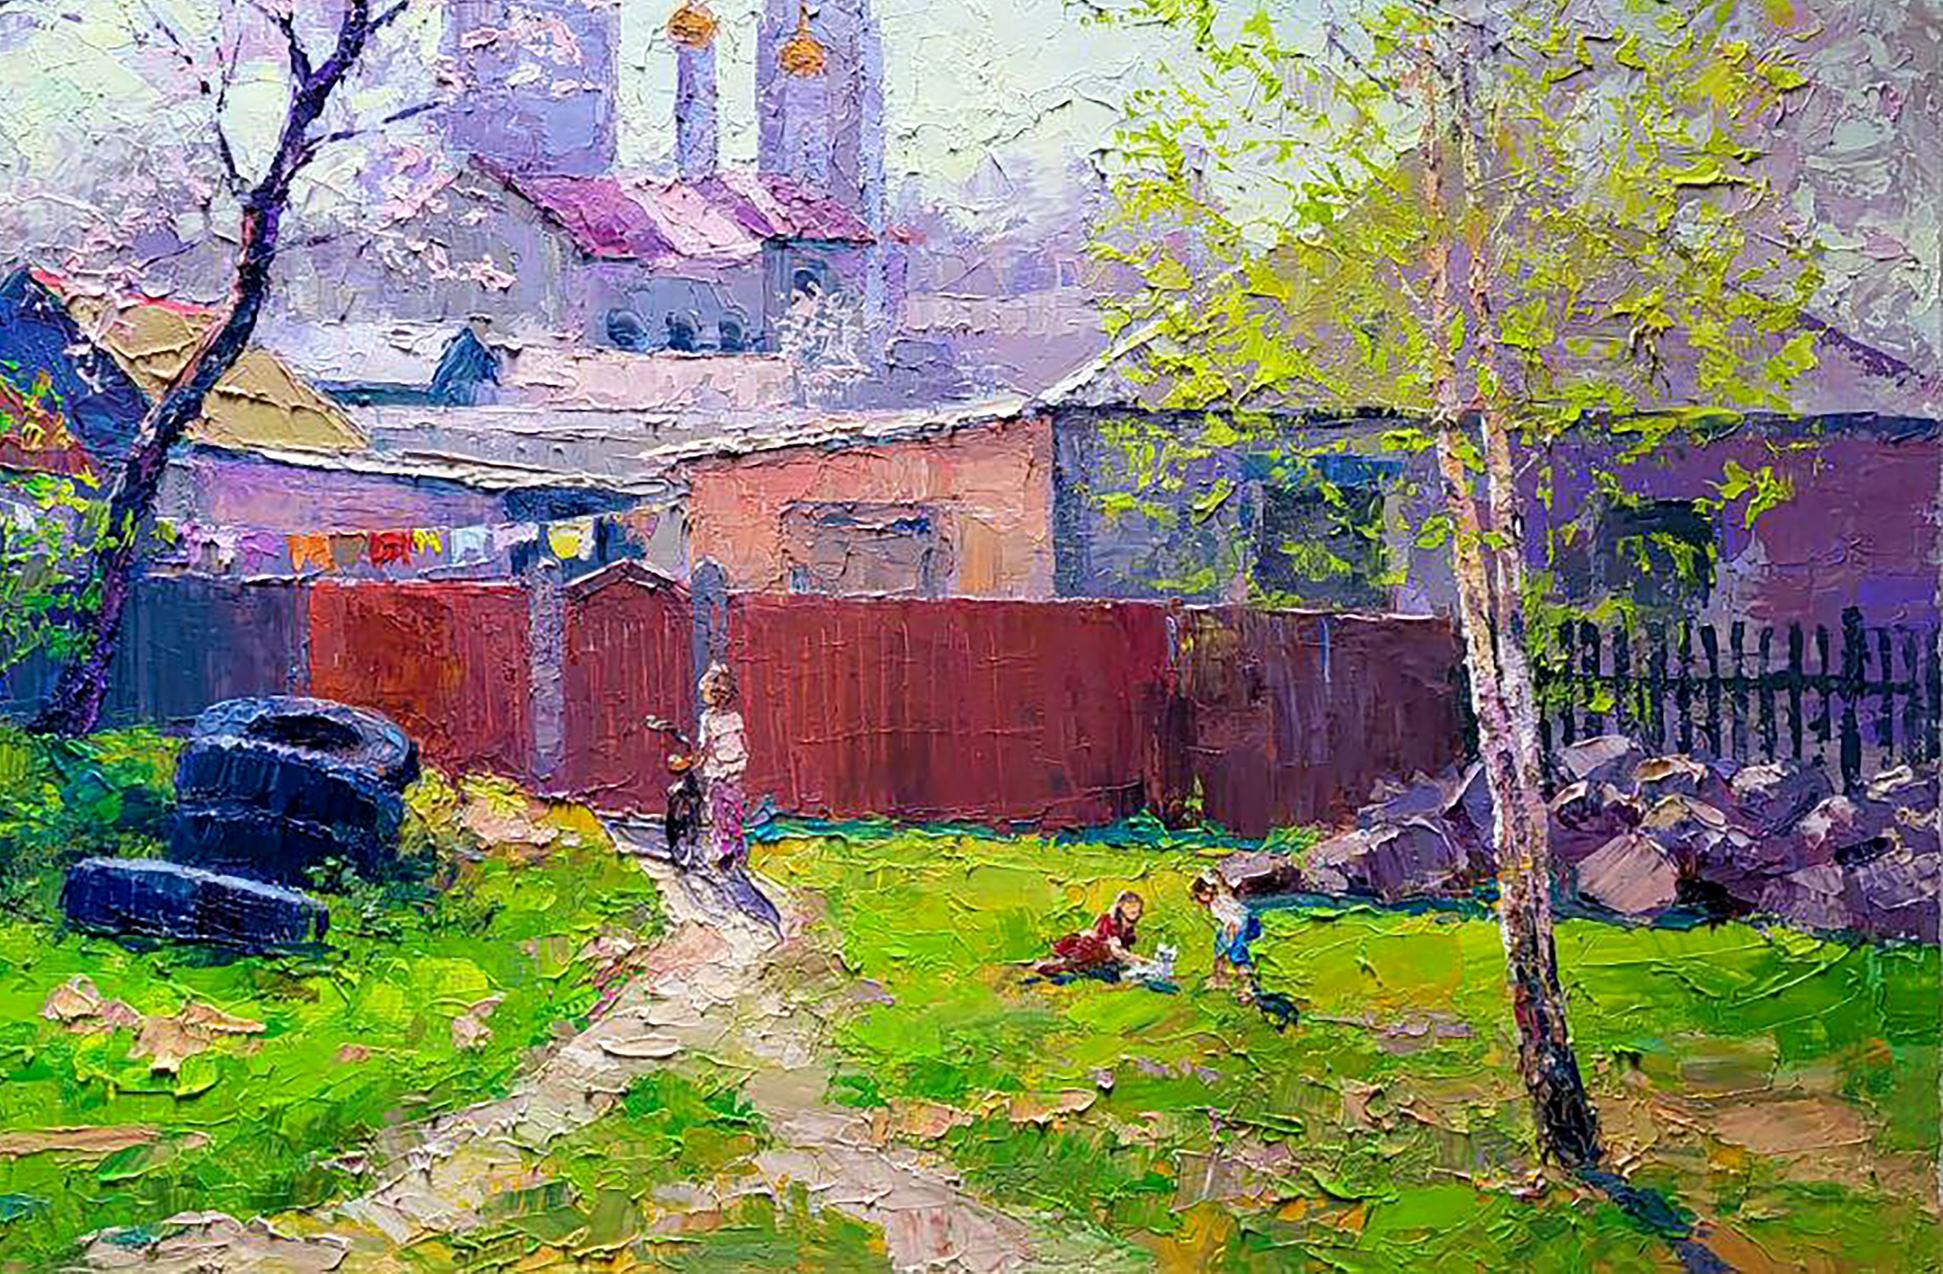 Artist: Boris Serdyuk 
Work: Original oil painting, handmade artwork, one of a kind 
Medium: Oil on Canvas
Style: Impressionism
Year: 2020
Title: April Rays
Size: 27.5